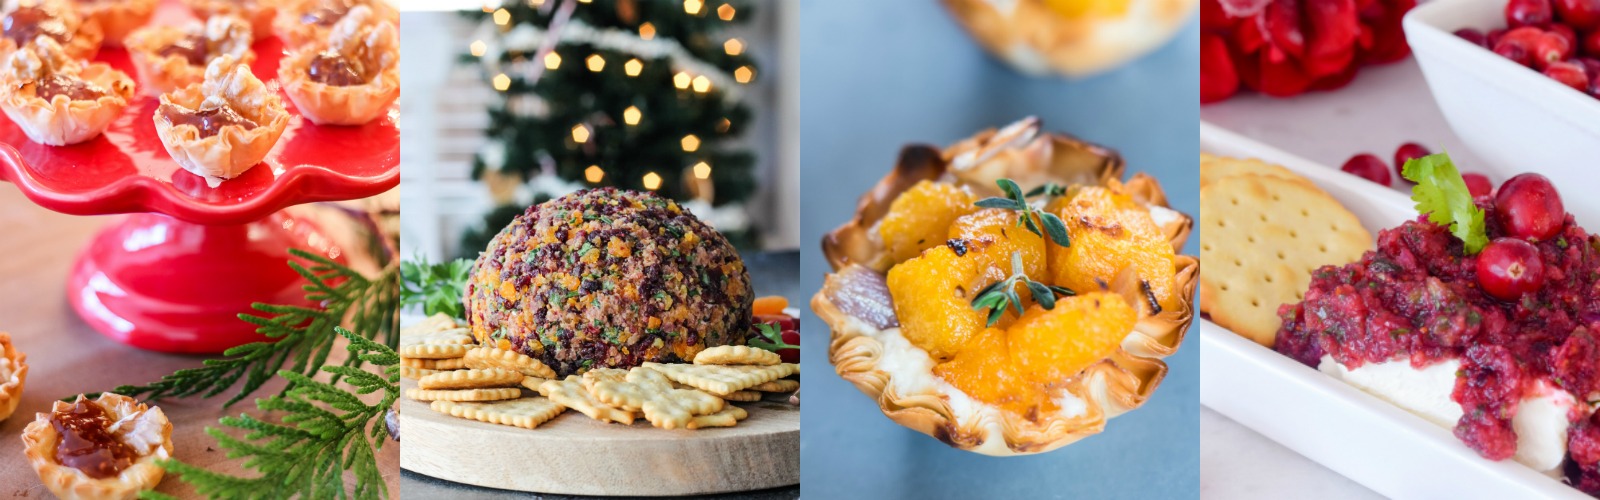 https://thehappyhousie.porch.com/wp-content/uploads/2019/12/Seasonal-Simplicity-Holiday-Appetizer-Recipes-1.jpg